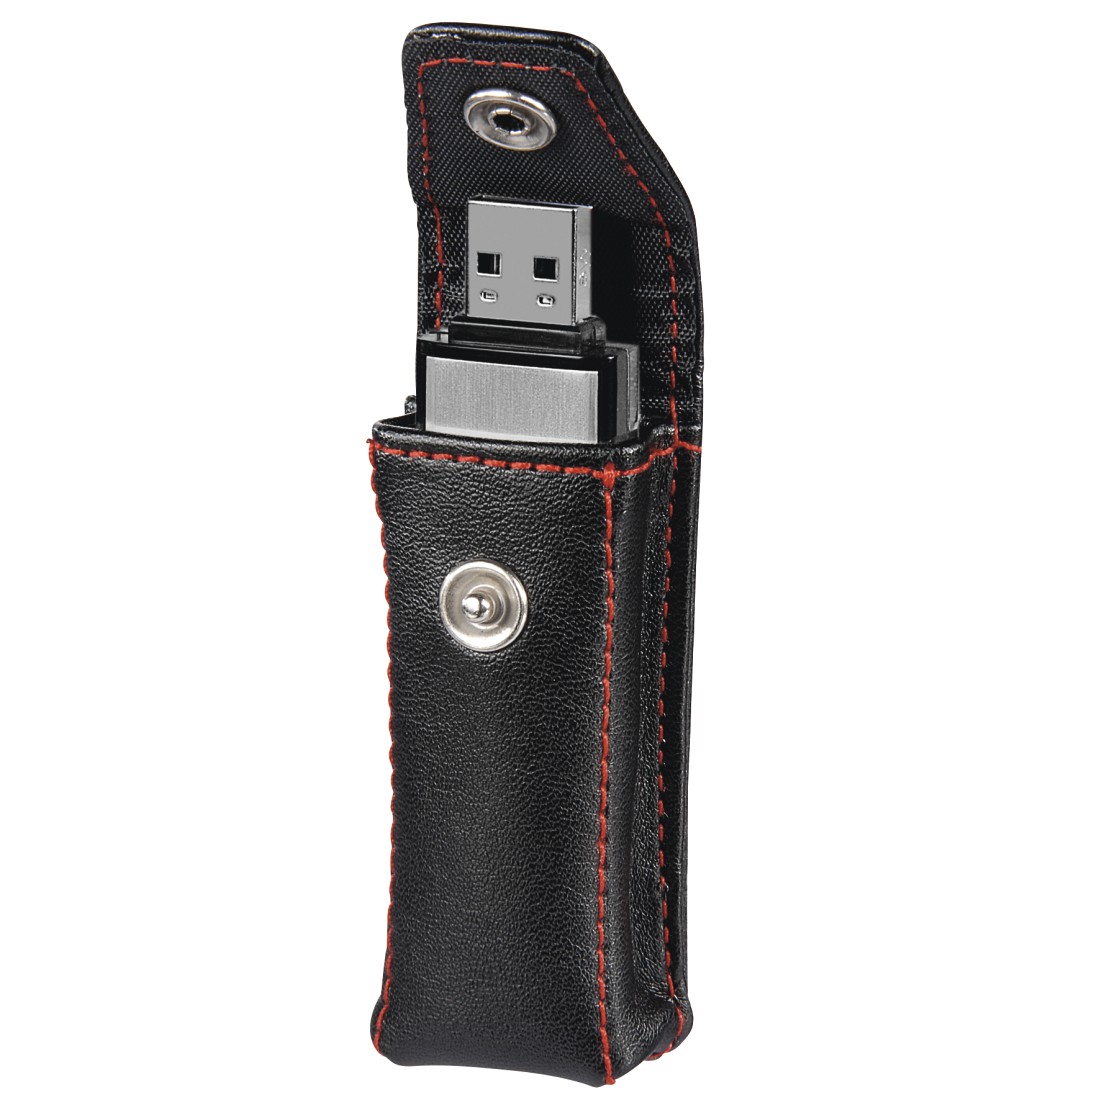 00090775 Hama "Fashion" USB Stick Case, black